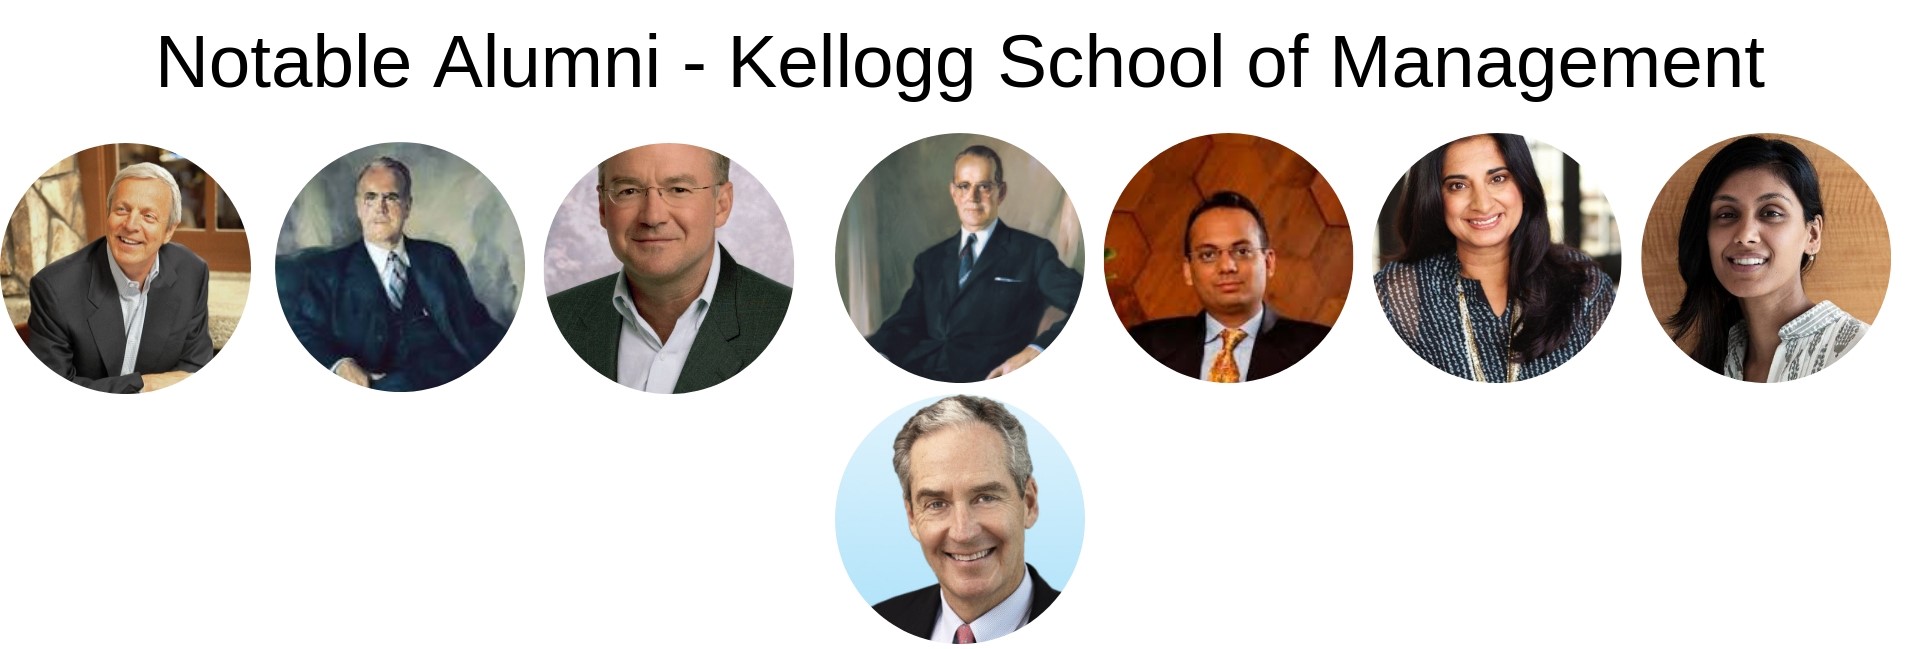 Kellogg MBA Program Alumni (1)